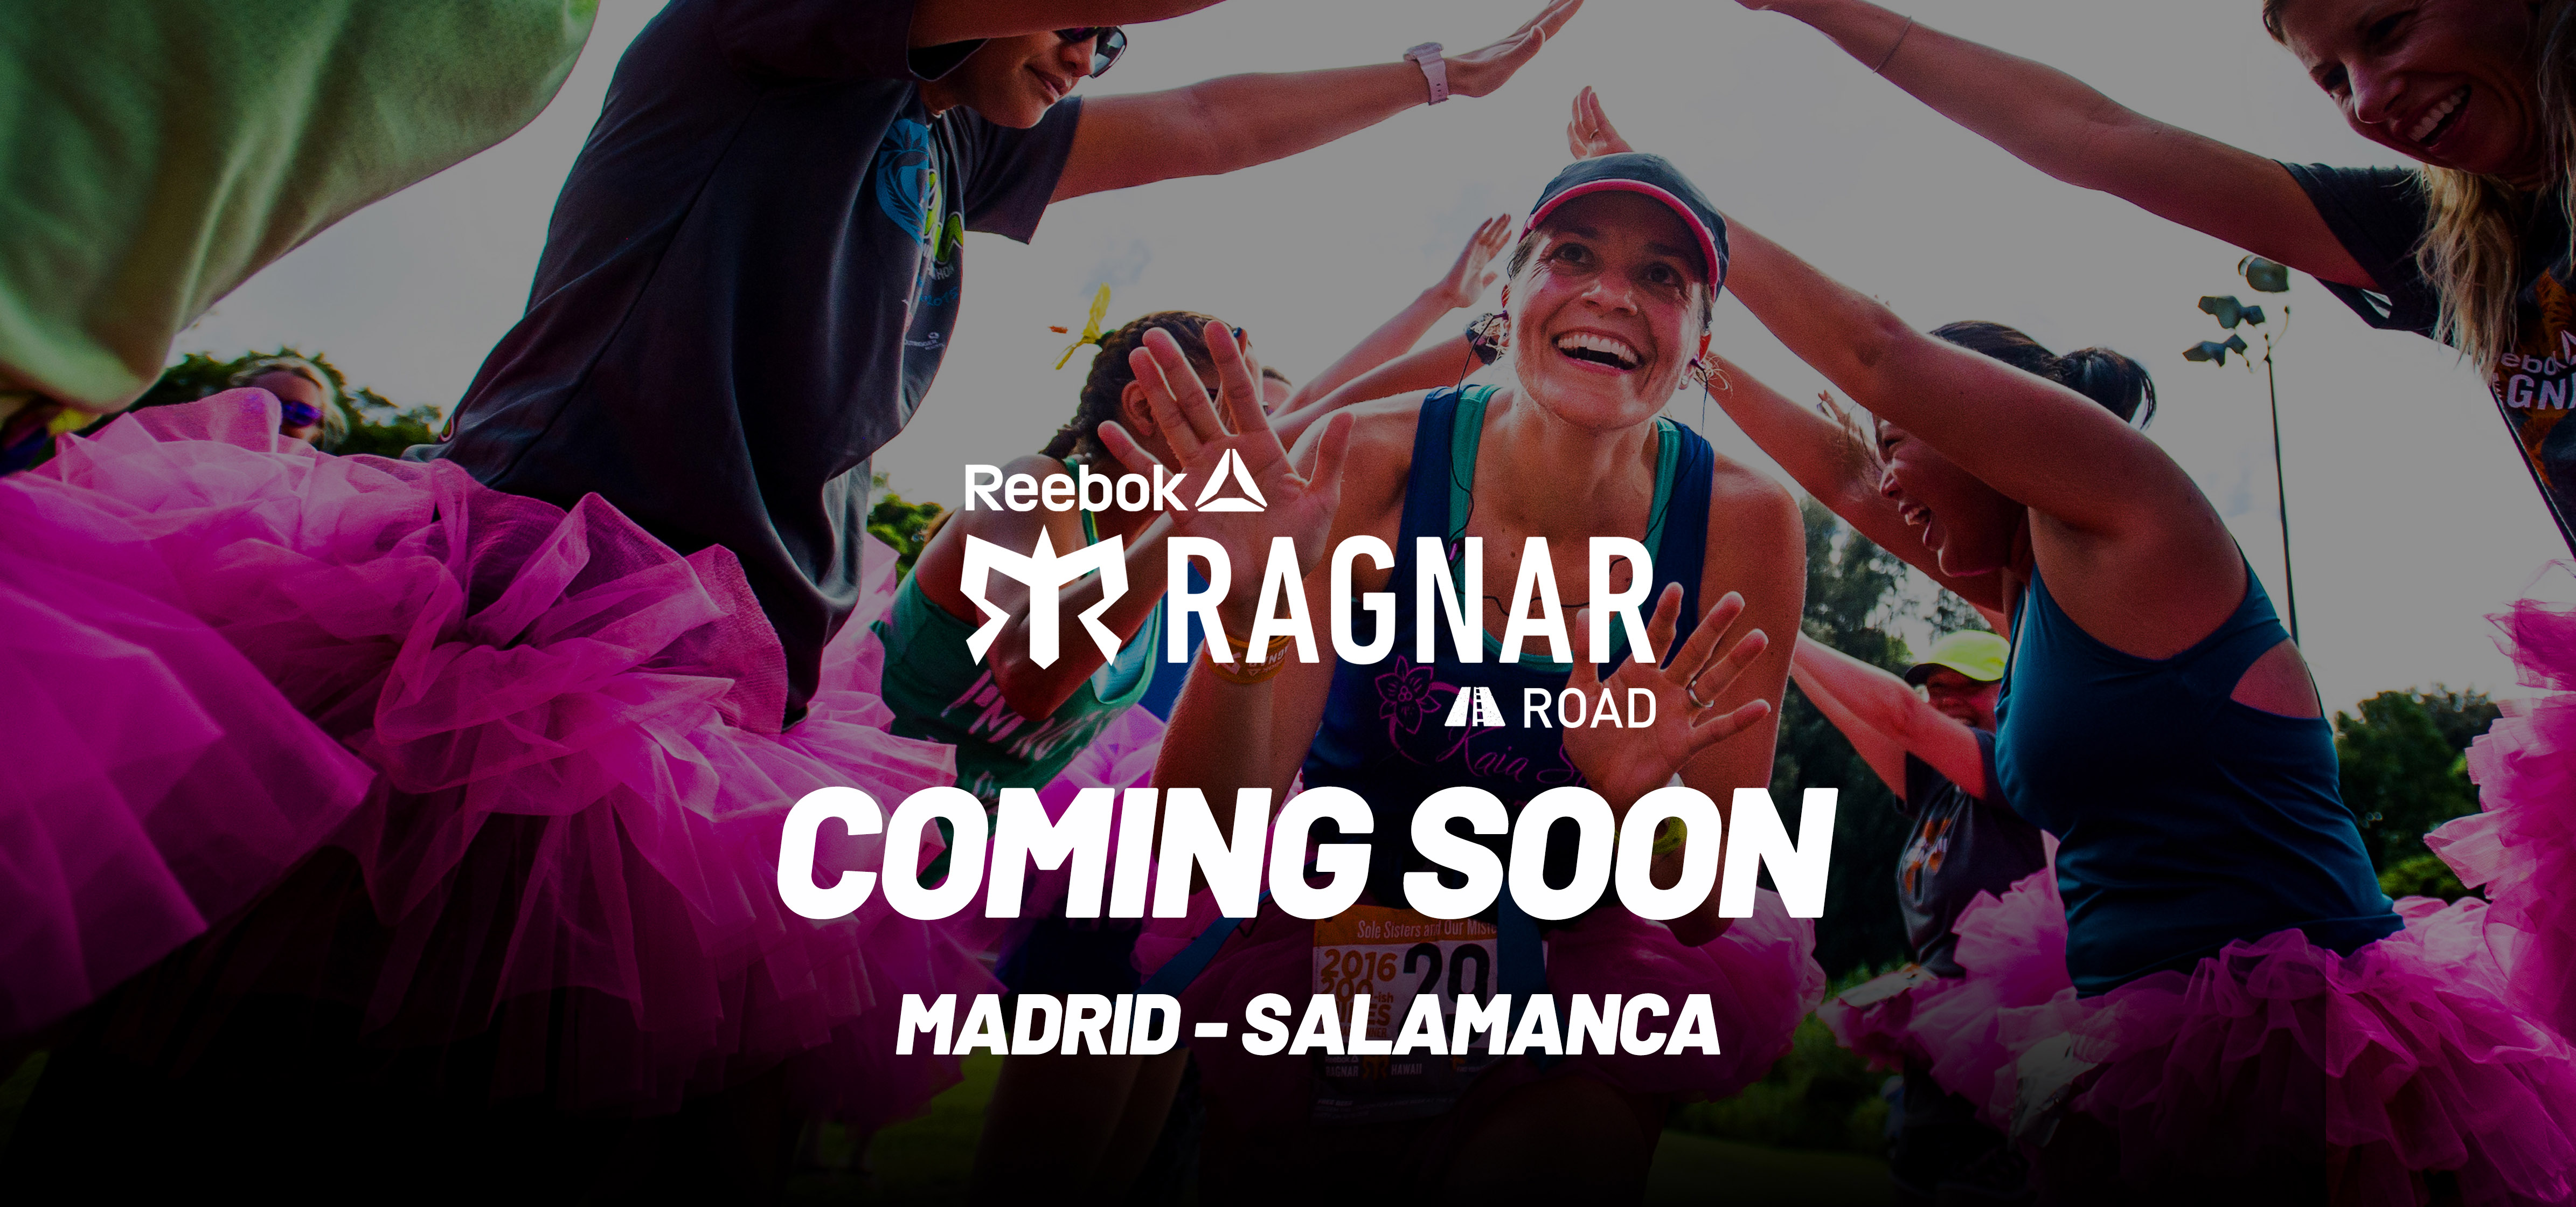 Ragnar llega a España | AD Mapoma